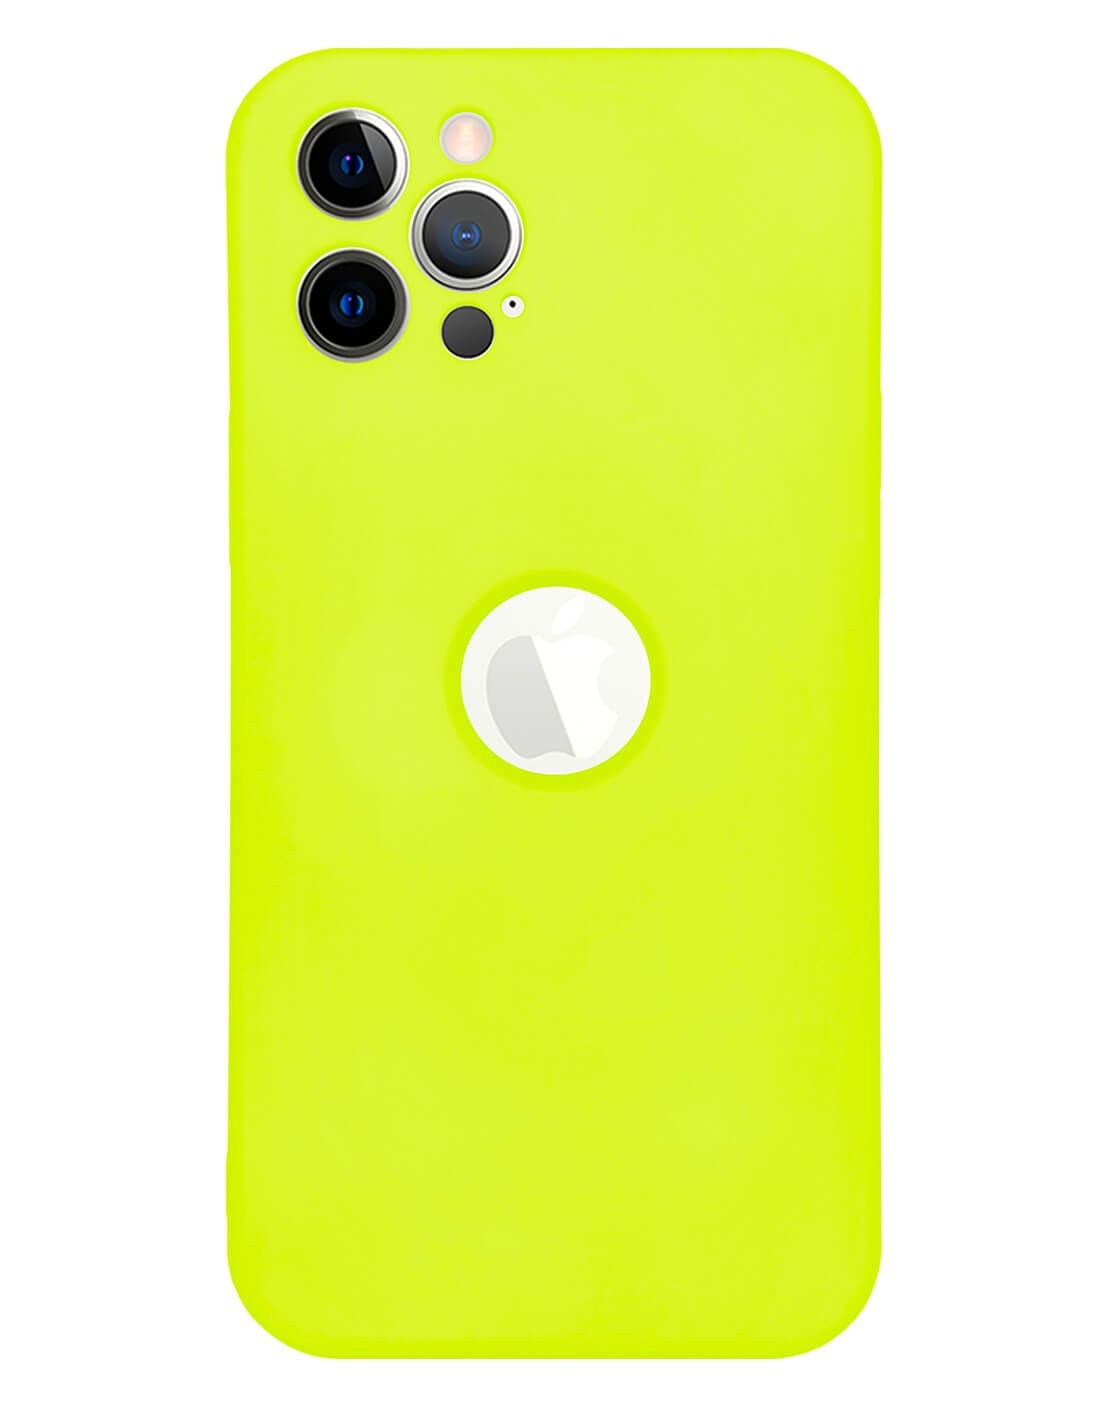 Carcasas iPhone 12 Pro Max Silicona Aterciopelada amarilla